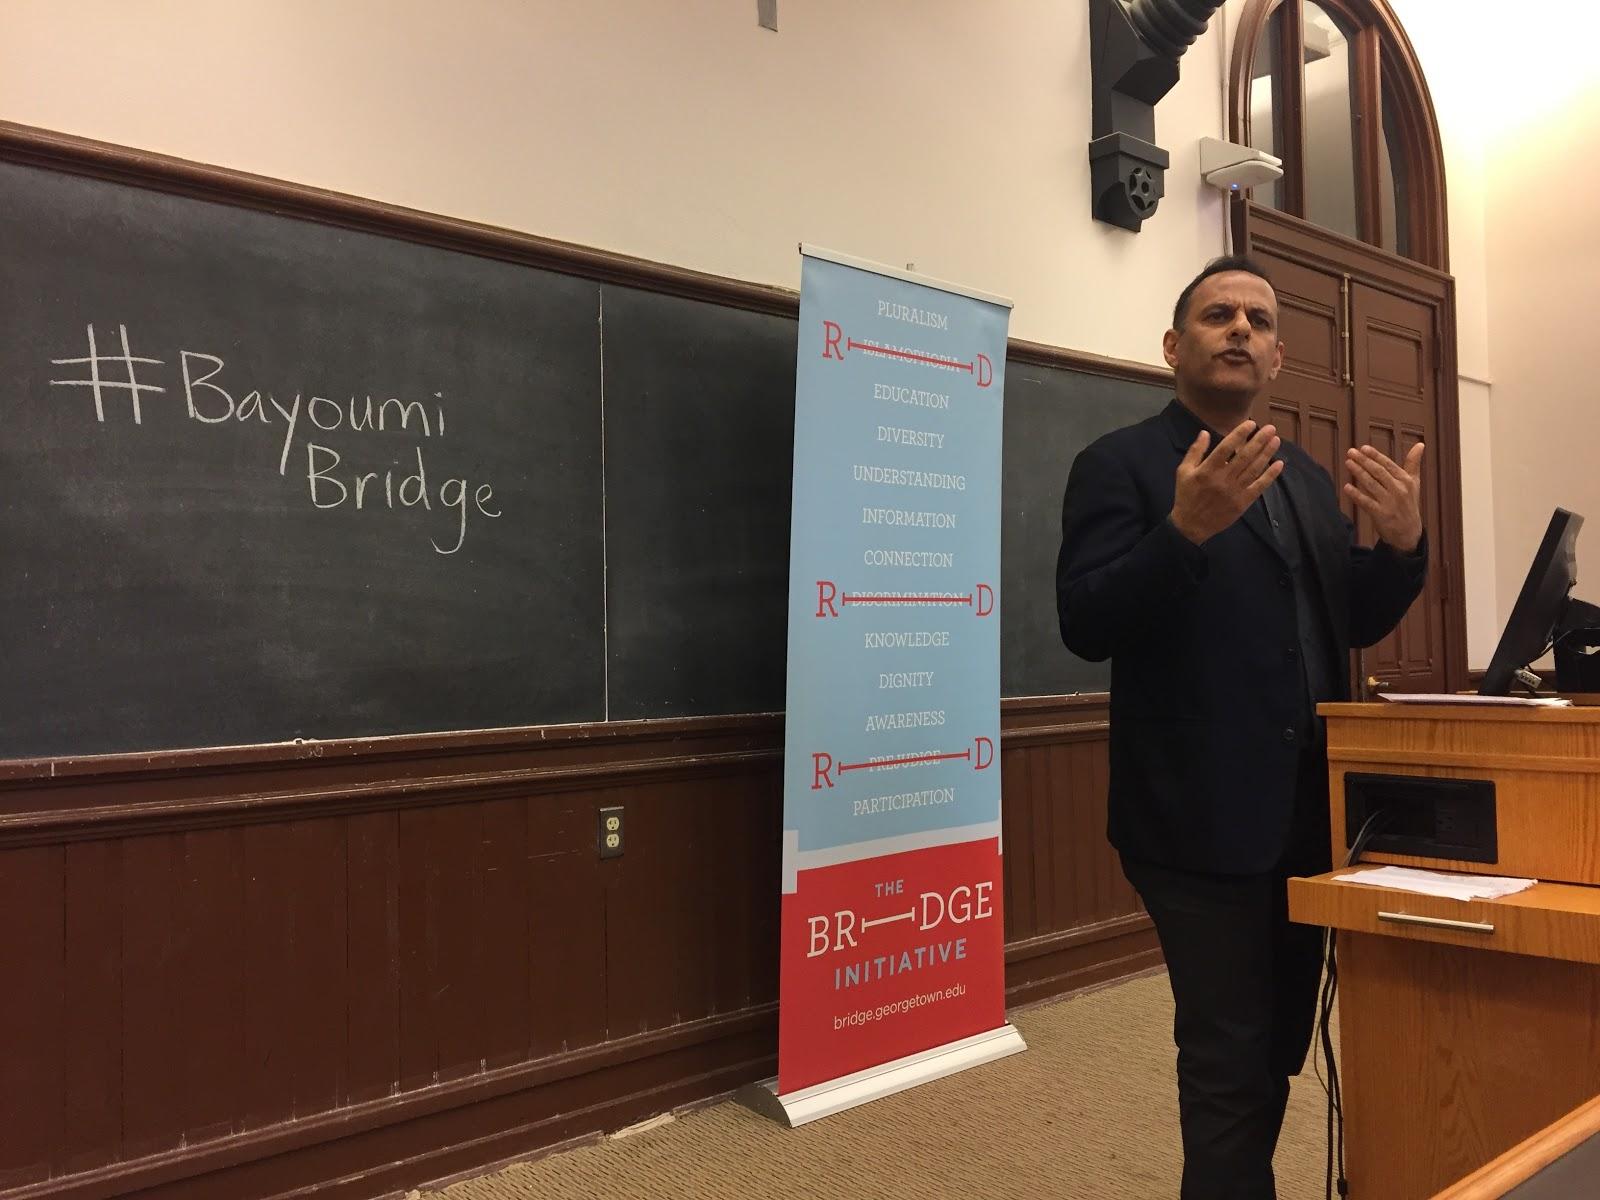 Professor Moustafa Bayoumi speaks at Georgetown University on April 25, 2017. The words "#BayoumiBridge" are written on a chalkboard in the background.